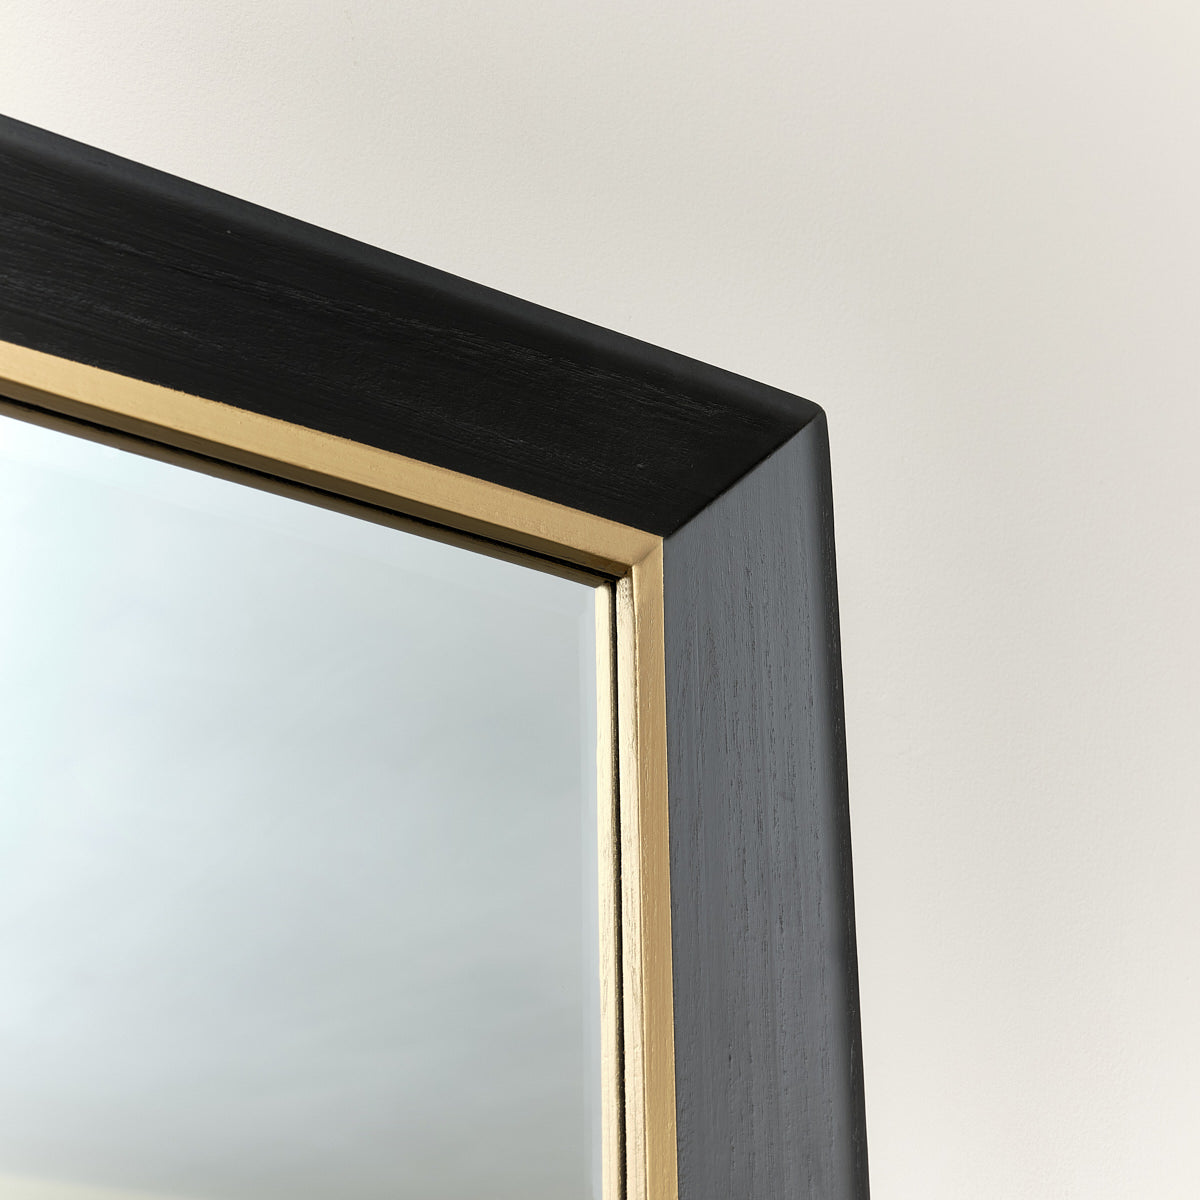 Large Rectangle Black & Gold Wall Mirror 158cm x 70cm